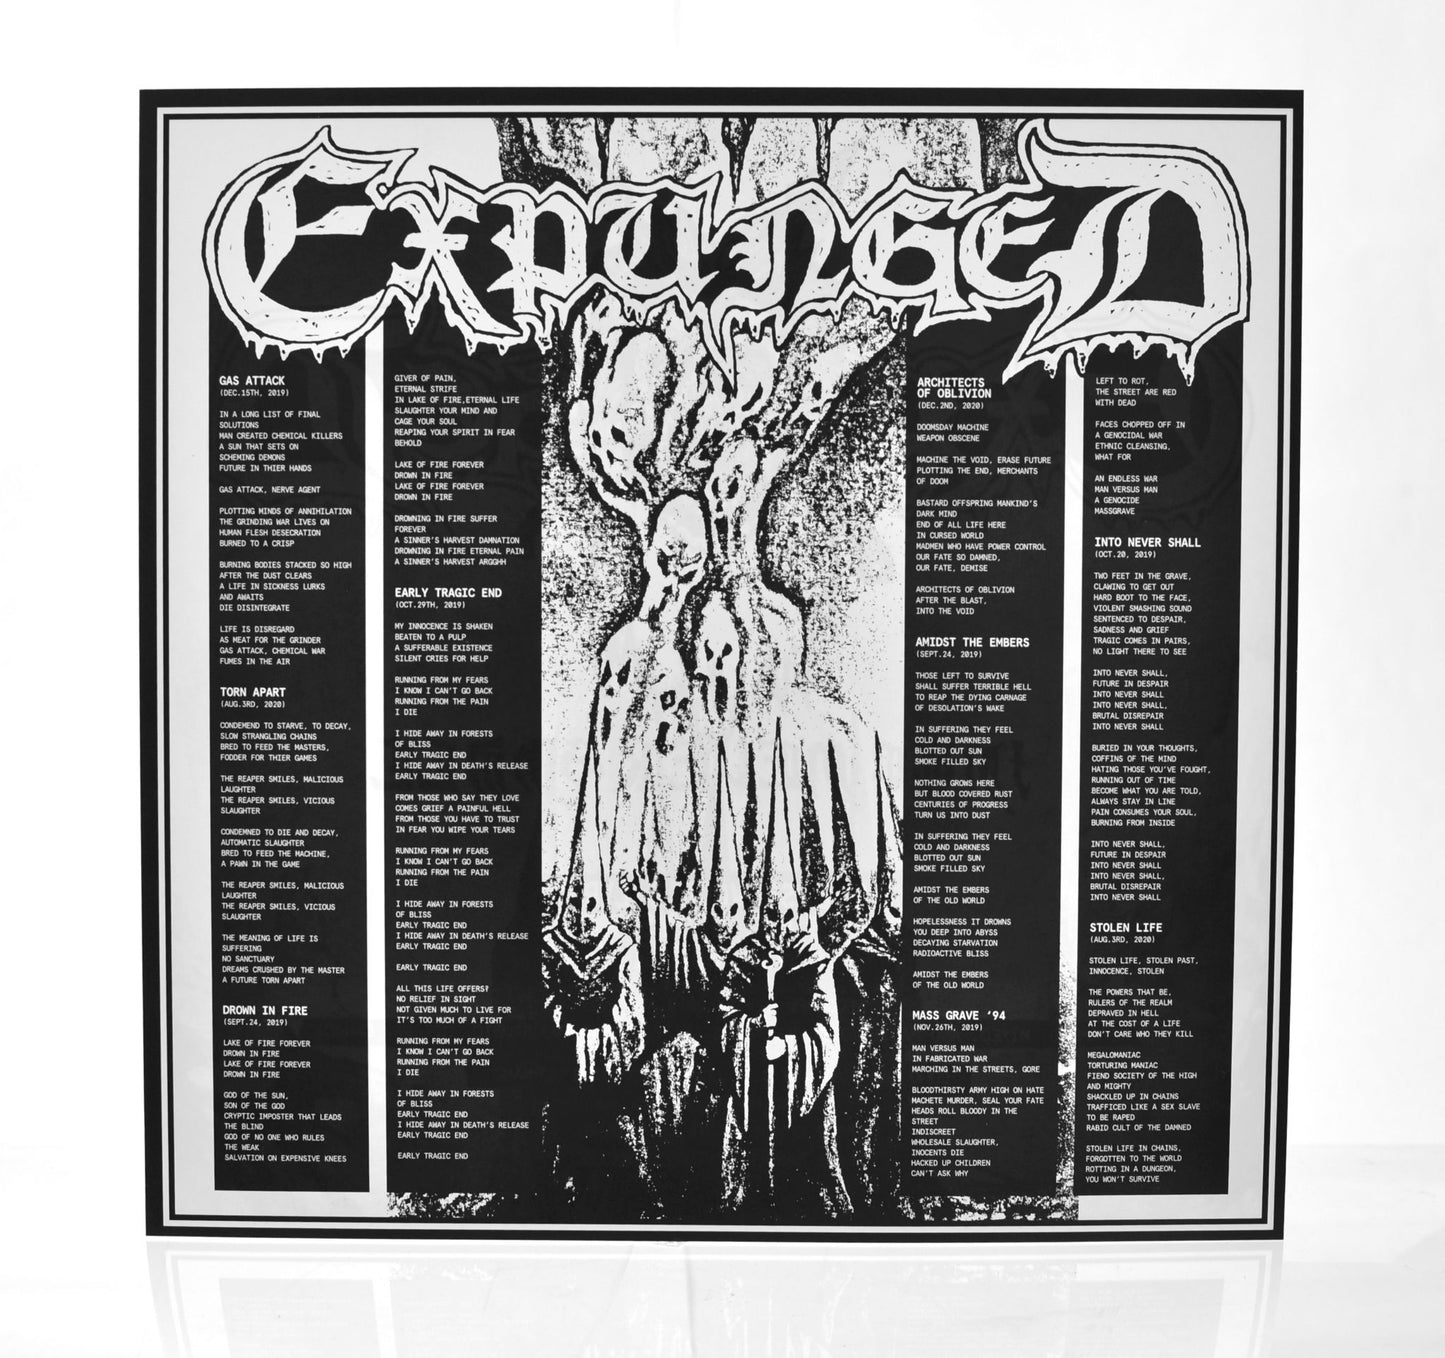 EXPUNGED - Into Never Shall ( 12" LP Oranga/Blue Crush ) Death Metal aus Kanada